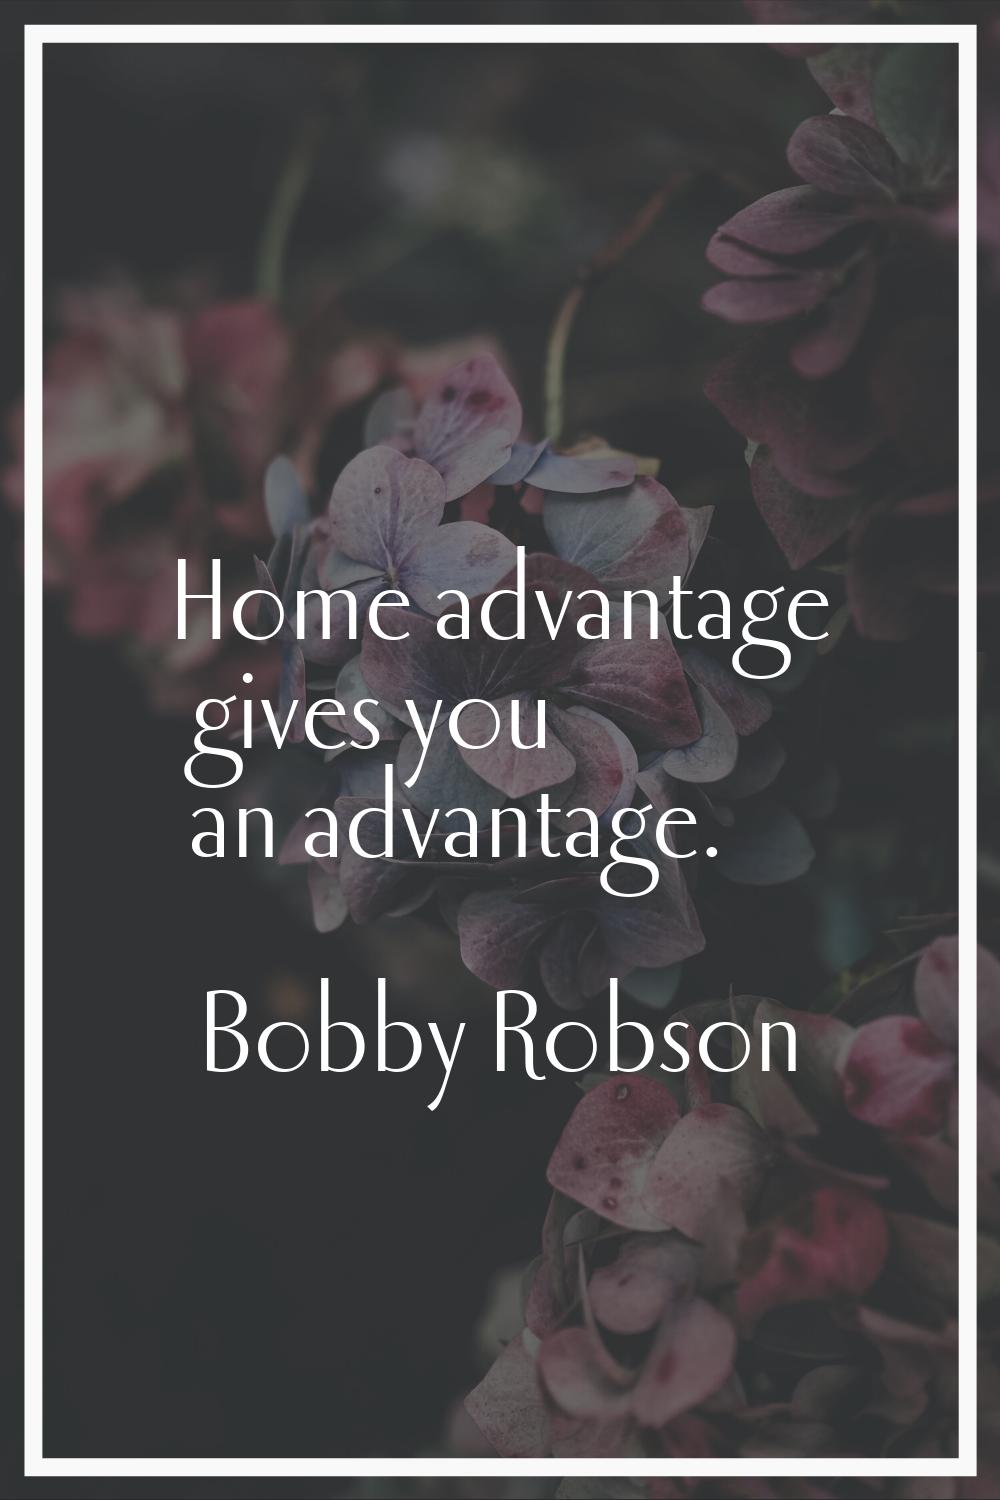 Home advantage gives you an advantage.